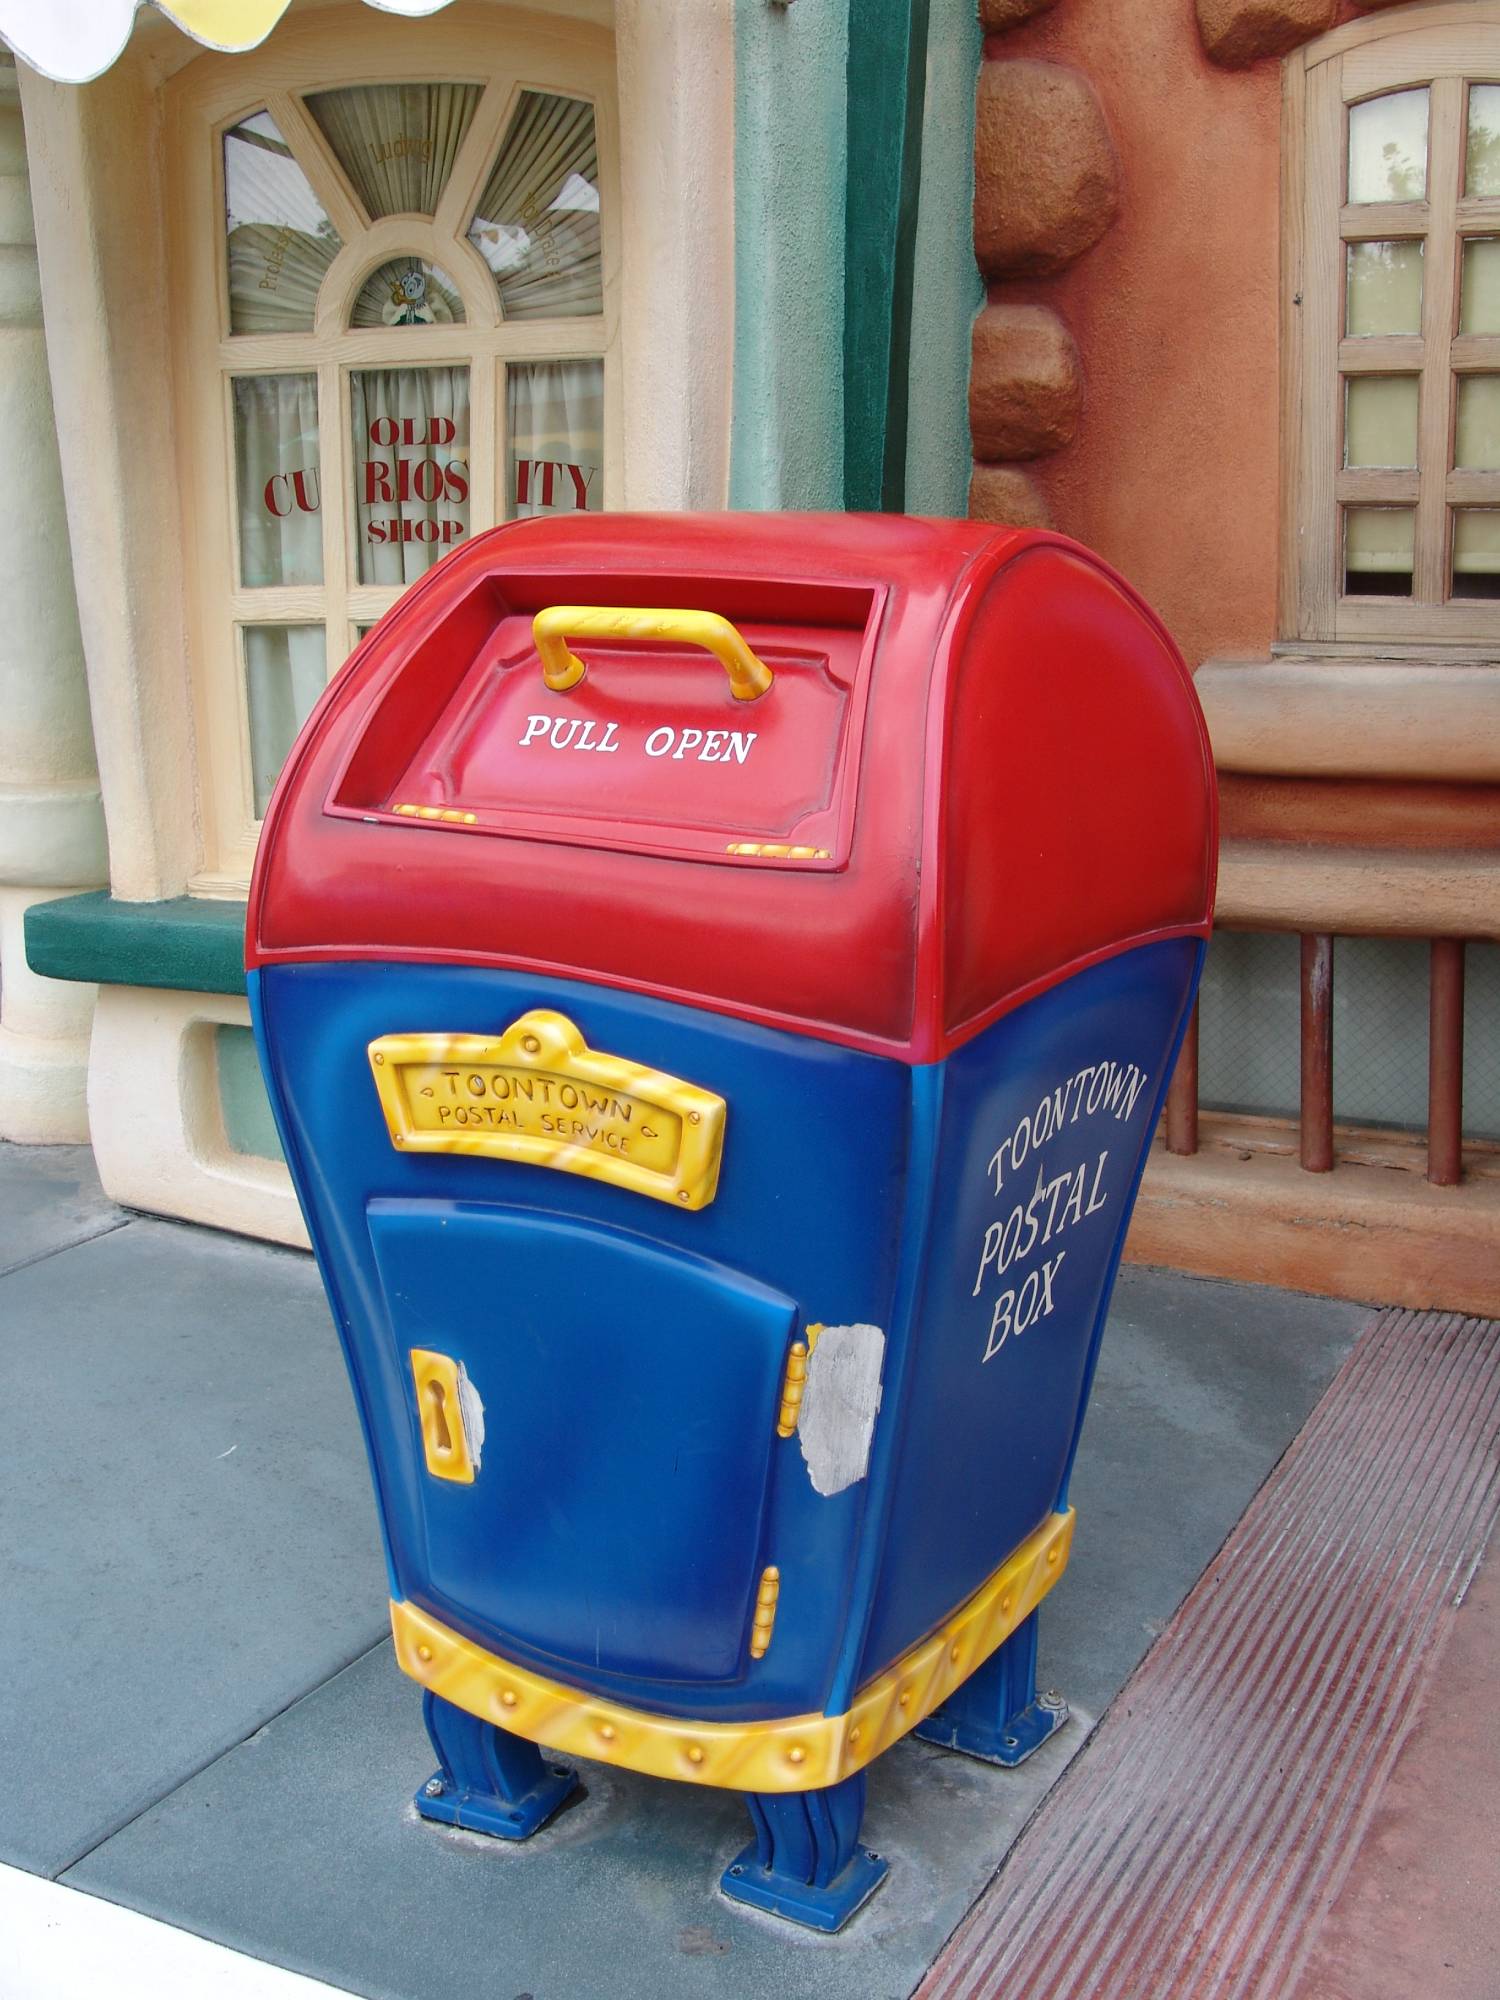 Disneyland - Mickey's Toontown